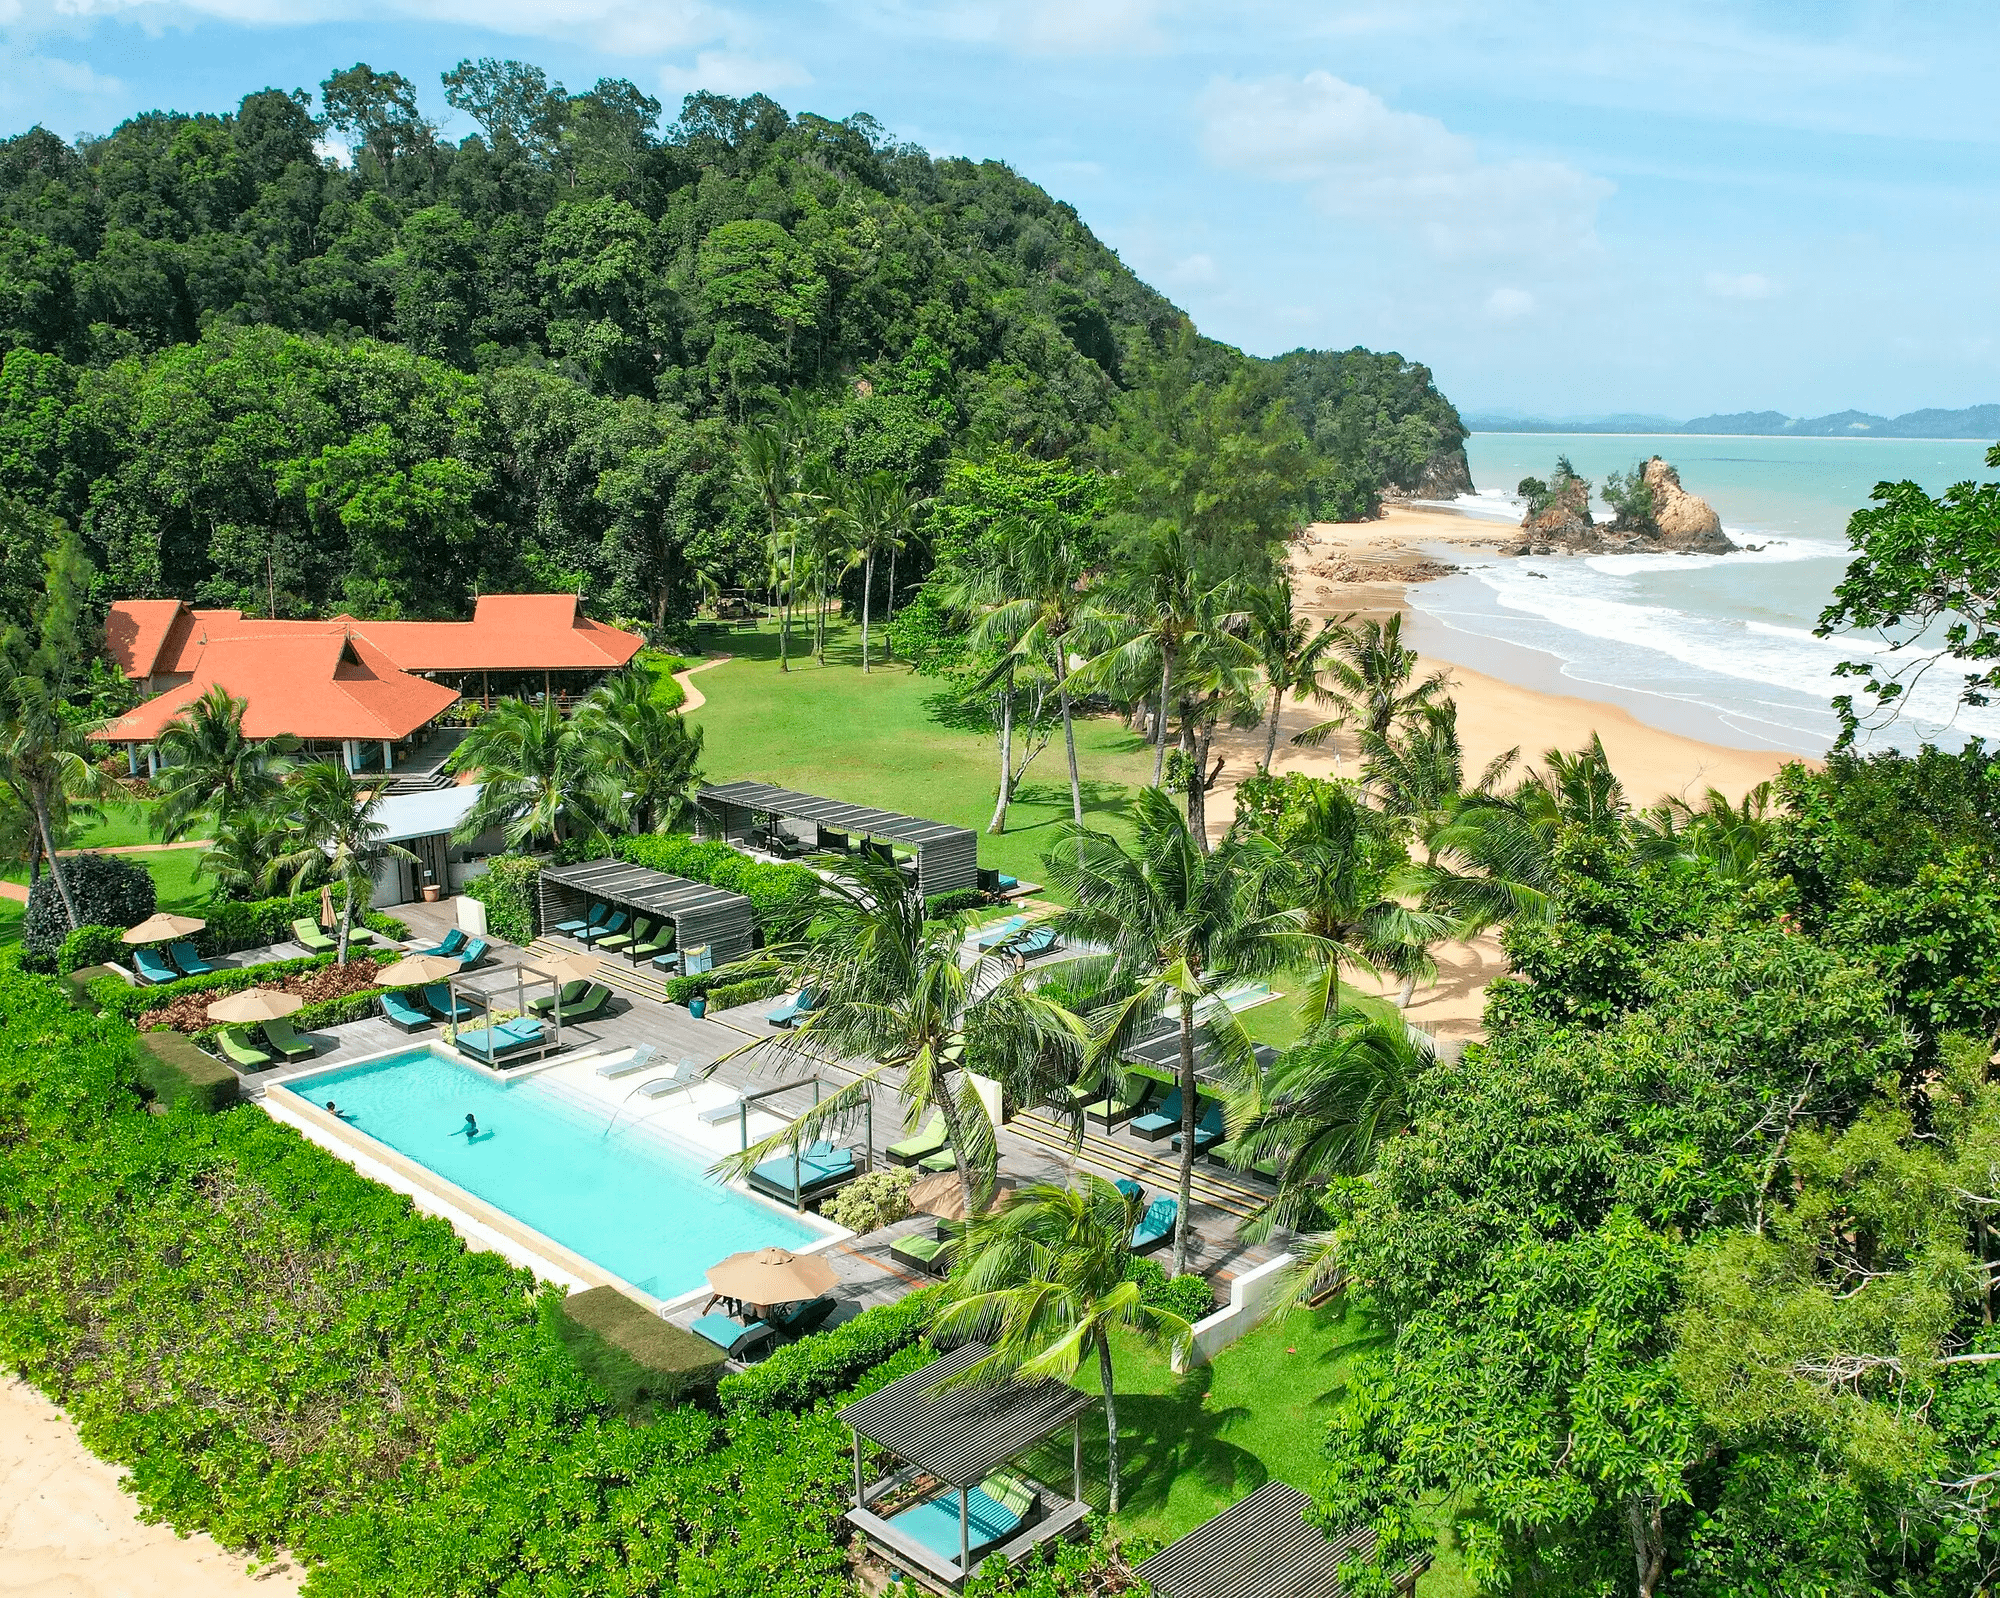 All Inclusive Resorts Near Singapore - Club Med Cherating Beach